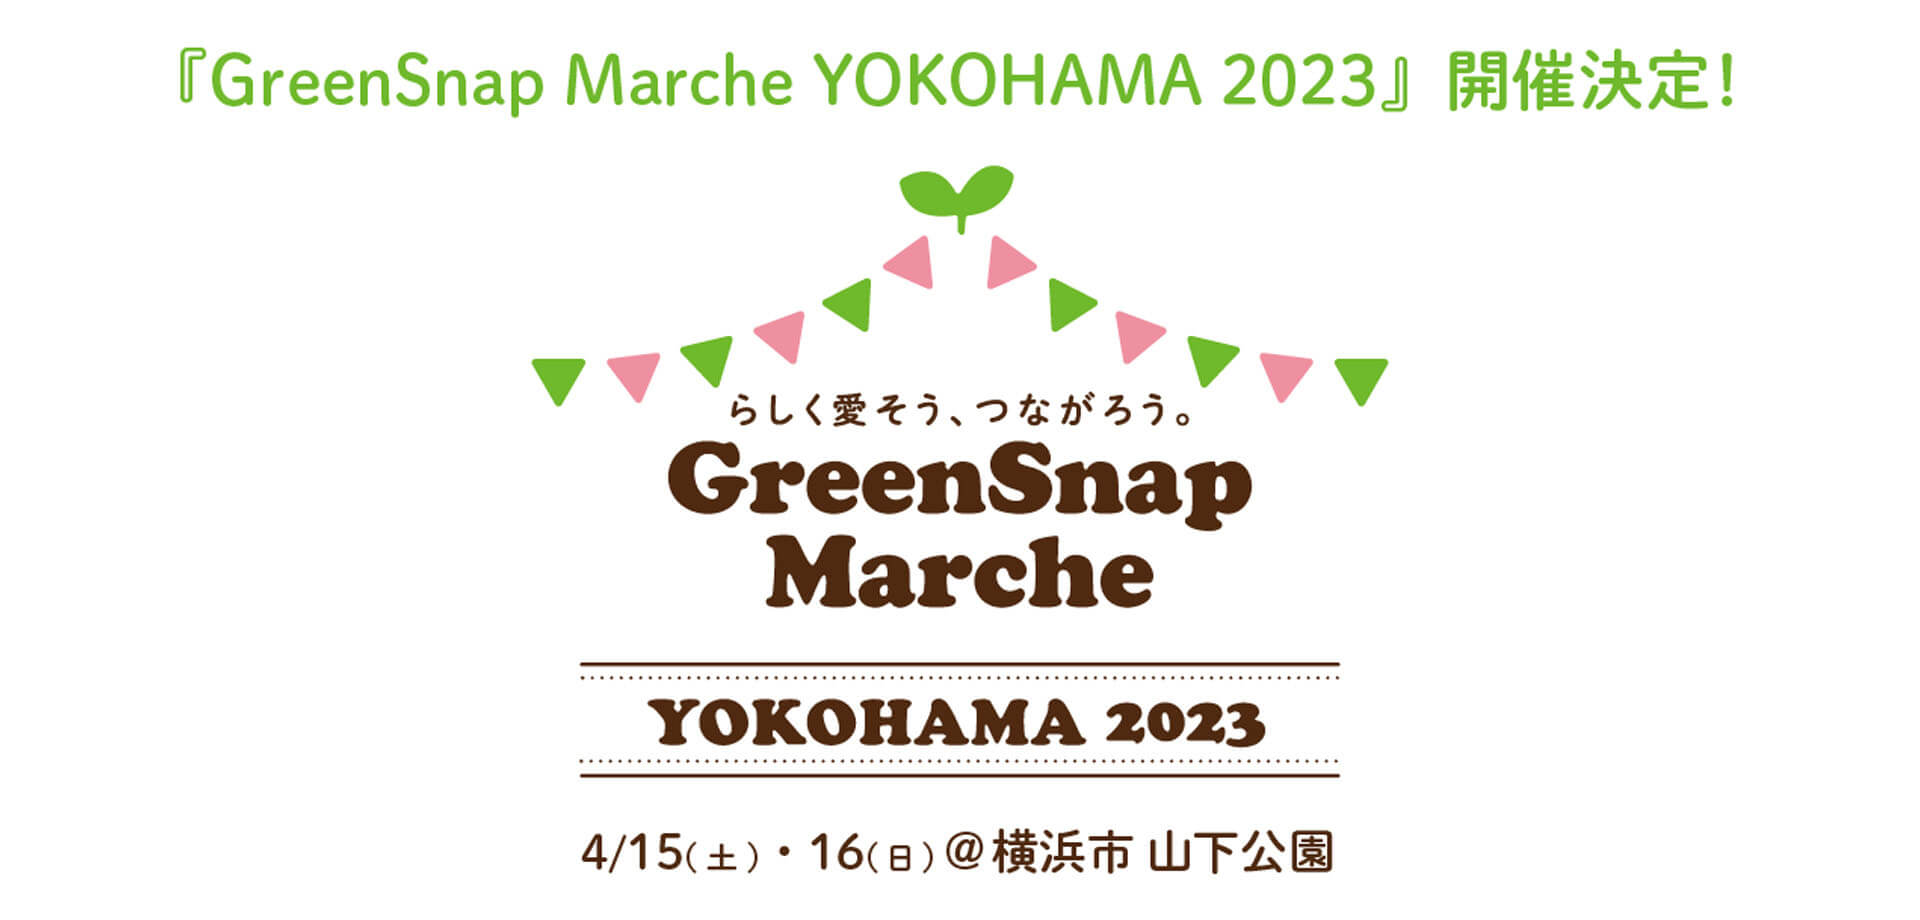 GreenSnap Marche YOKOHAMA 2023 ガーデンネックレス横浜2023 横浜